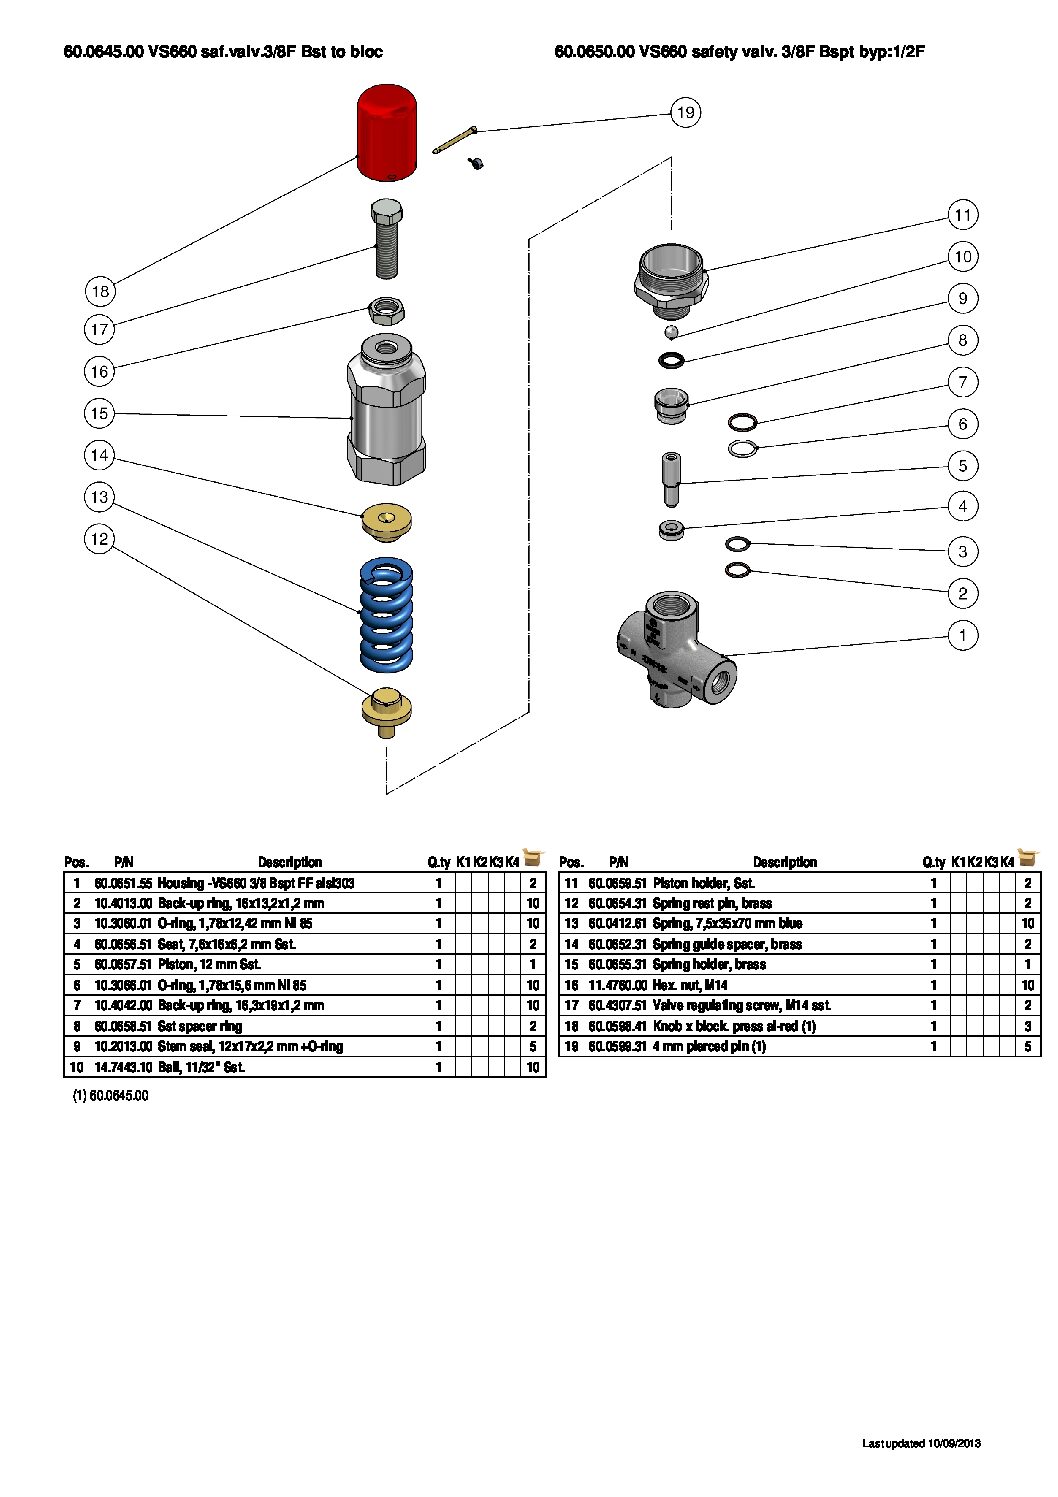 PA VS660 safety valve parts breakdown